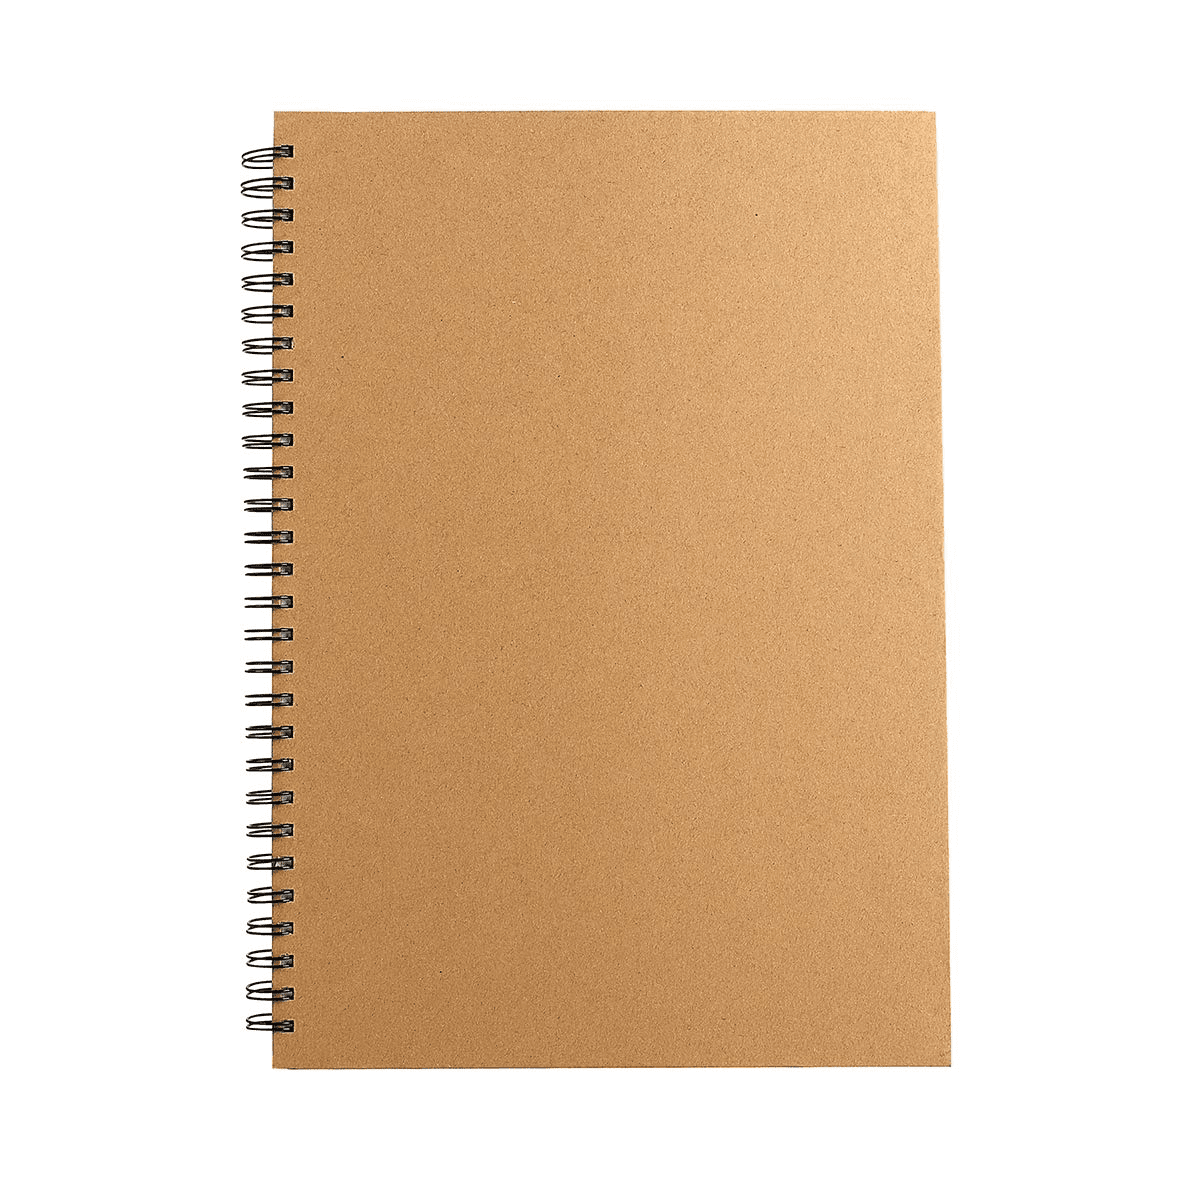 A4 Blank Notebook-1